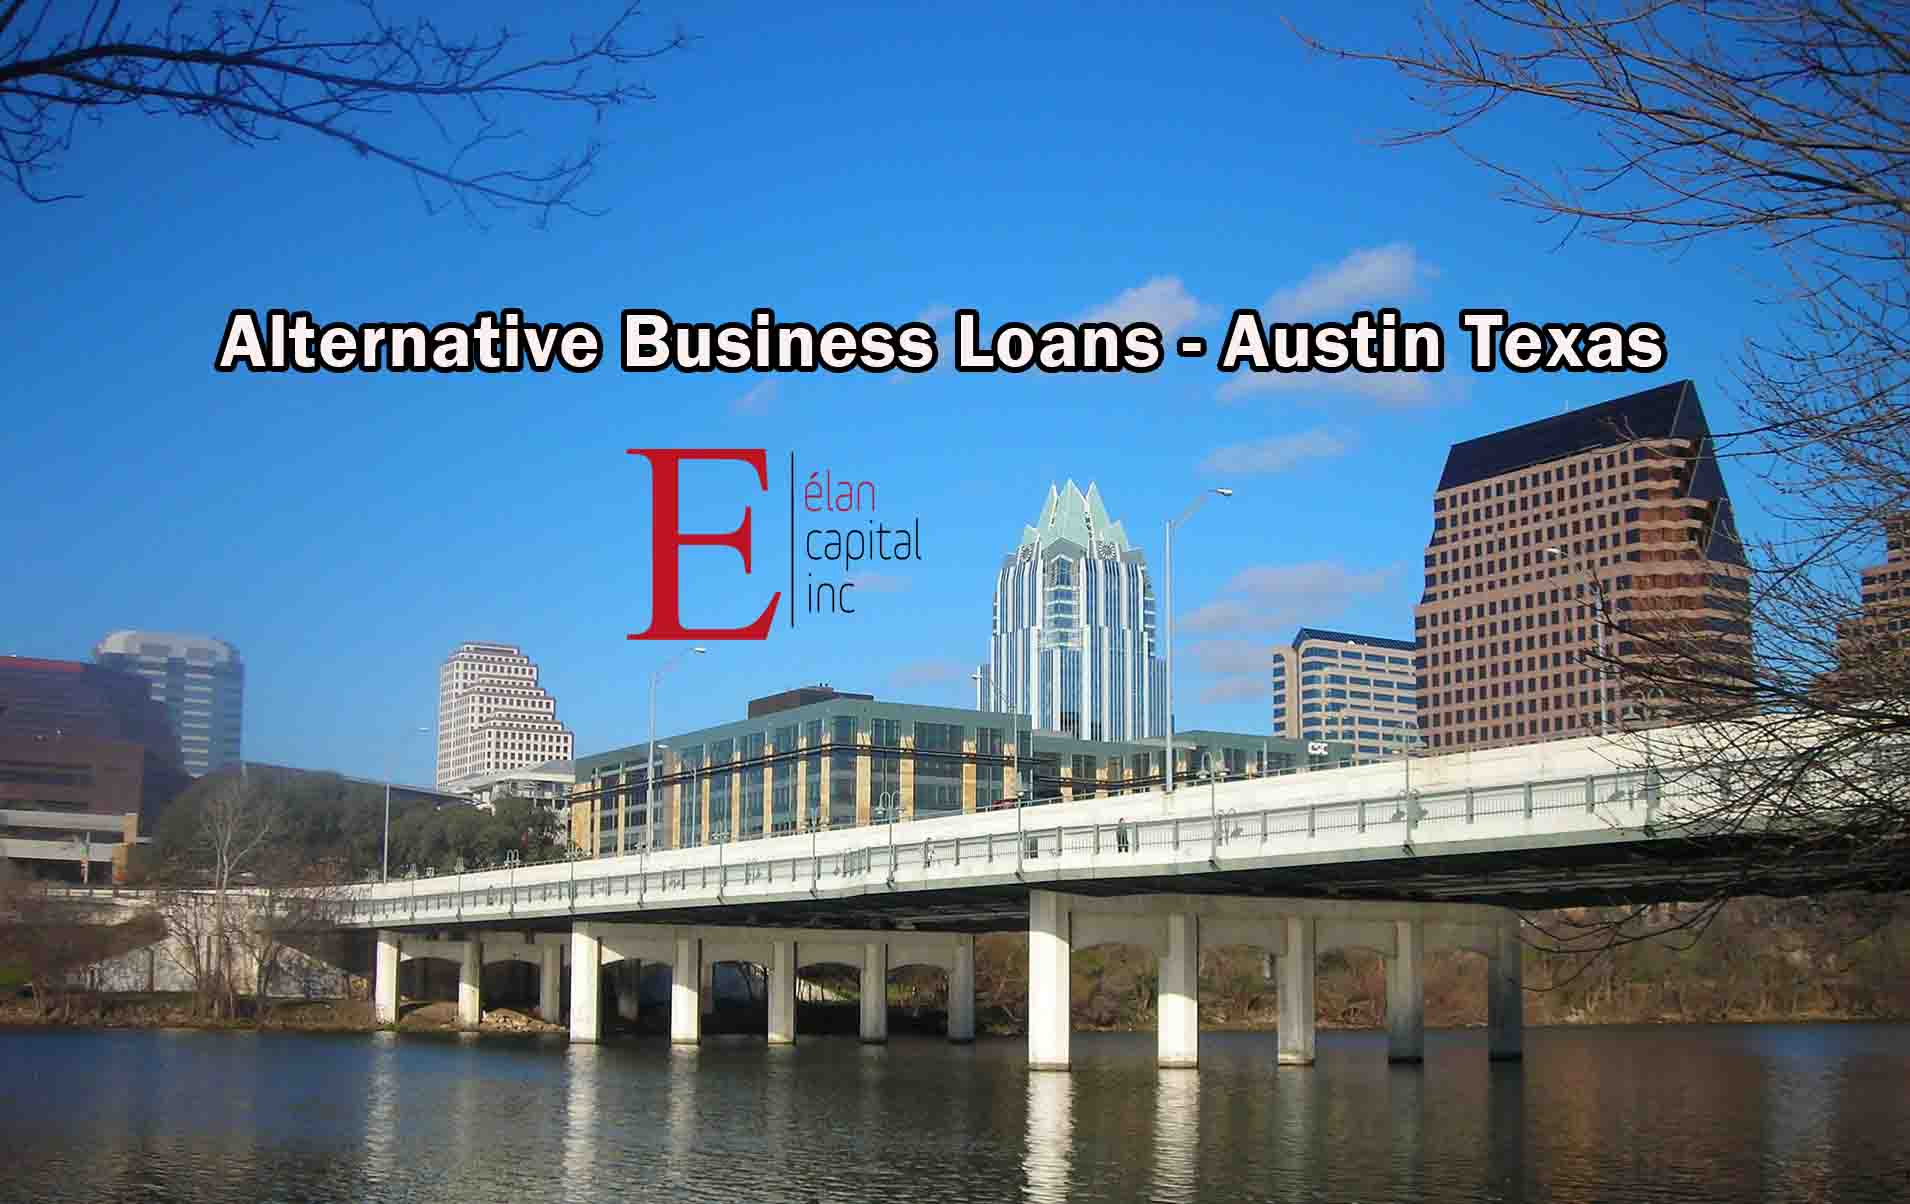 Alternative Business Loans - Austin Texas